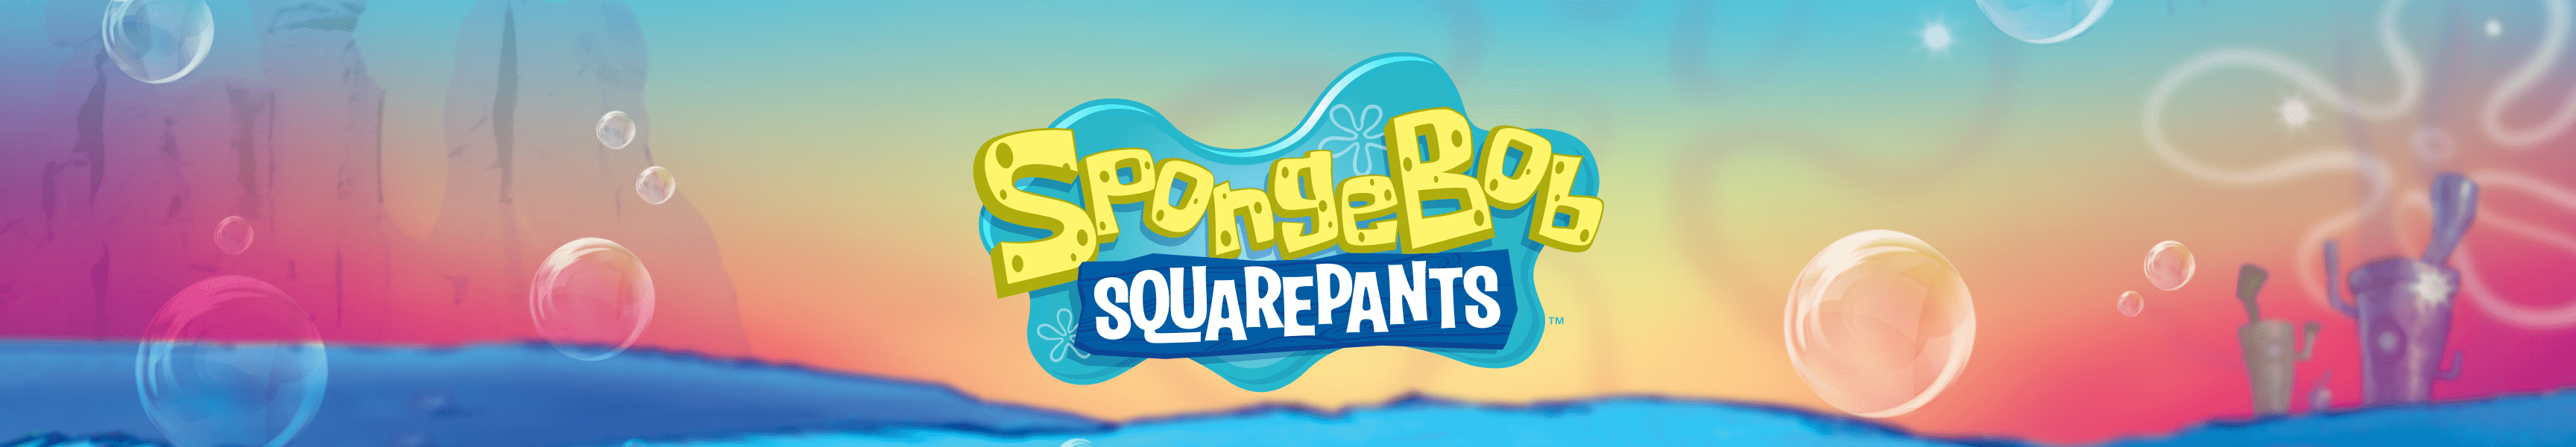 SpongeBob SquarePants Top 10 Holiday Gifts